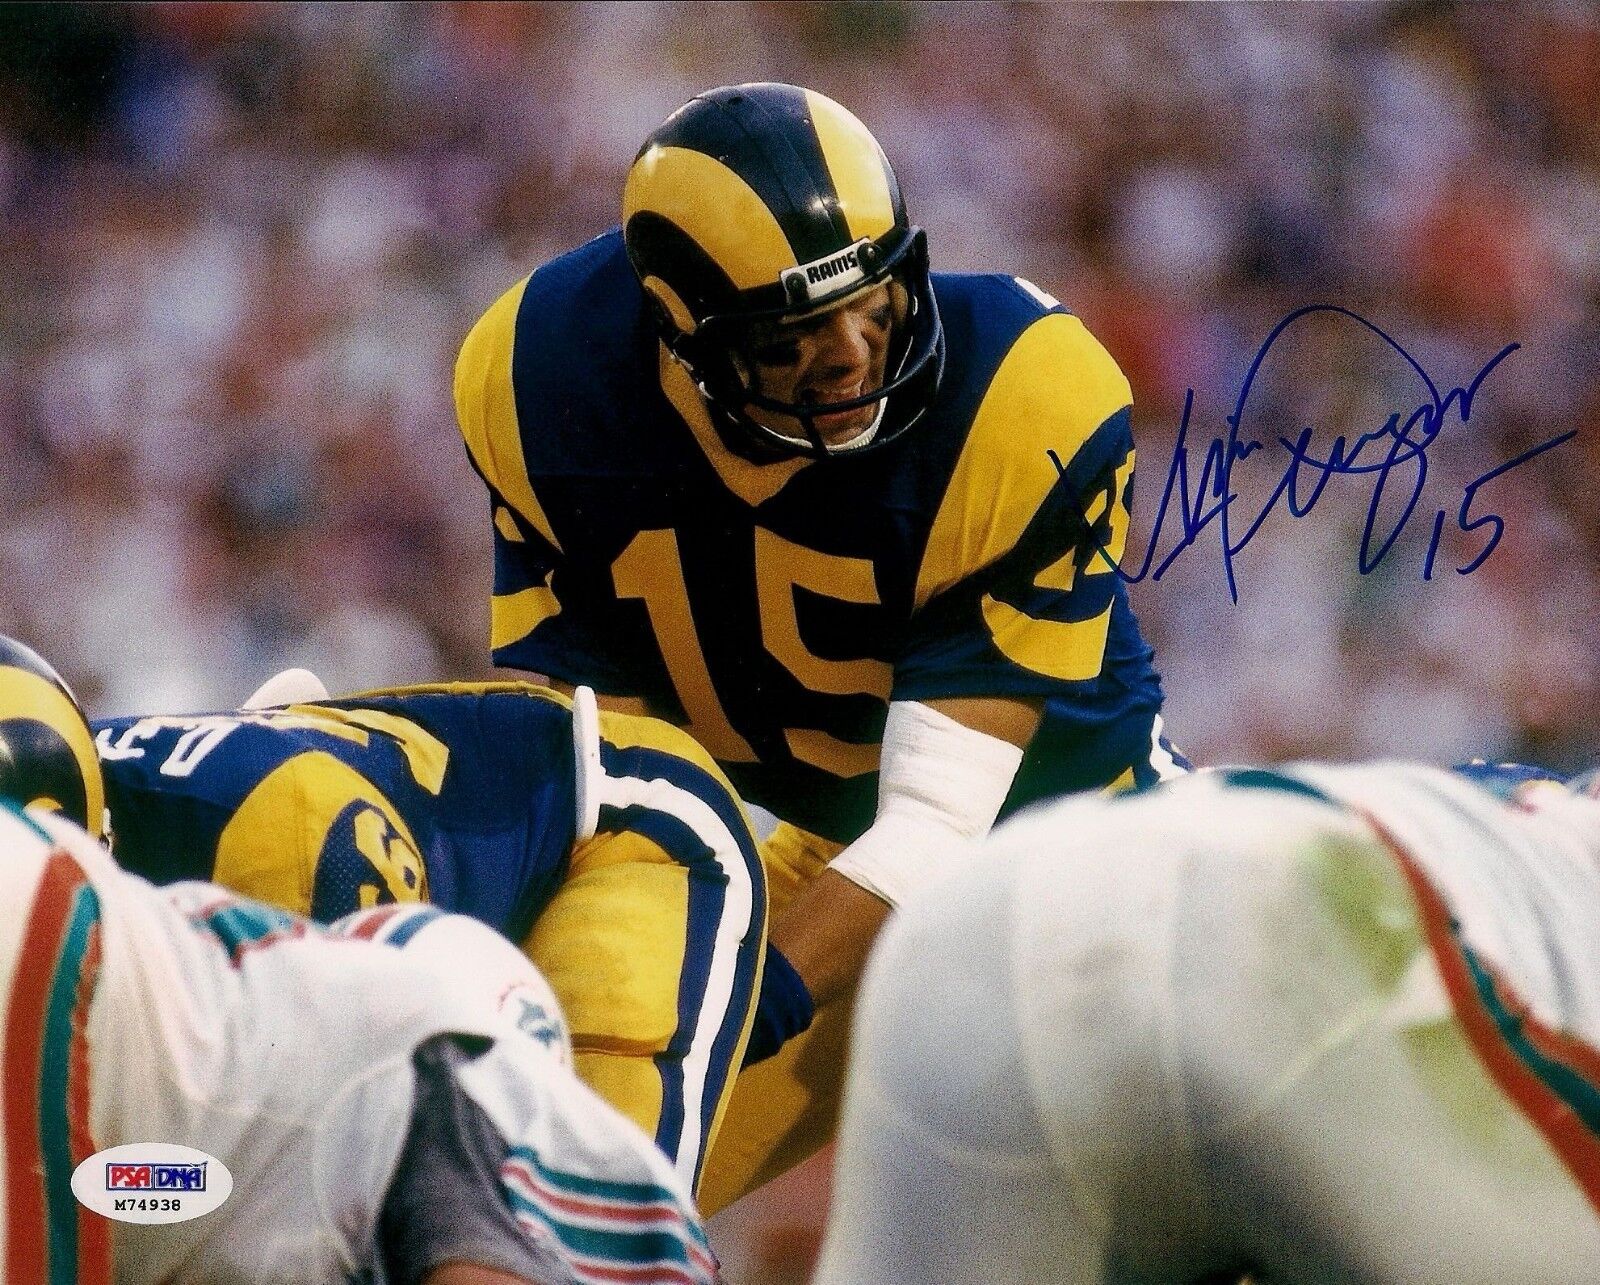 Vince Ferragamo Signed Los Angeles Rams 8x10 Photo Poster painting PSA/DNA COA Picture Autograph